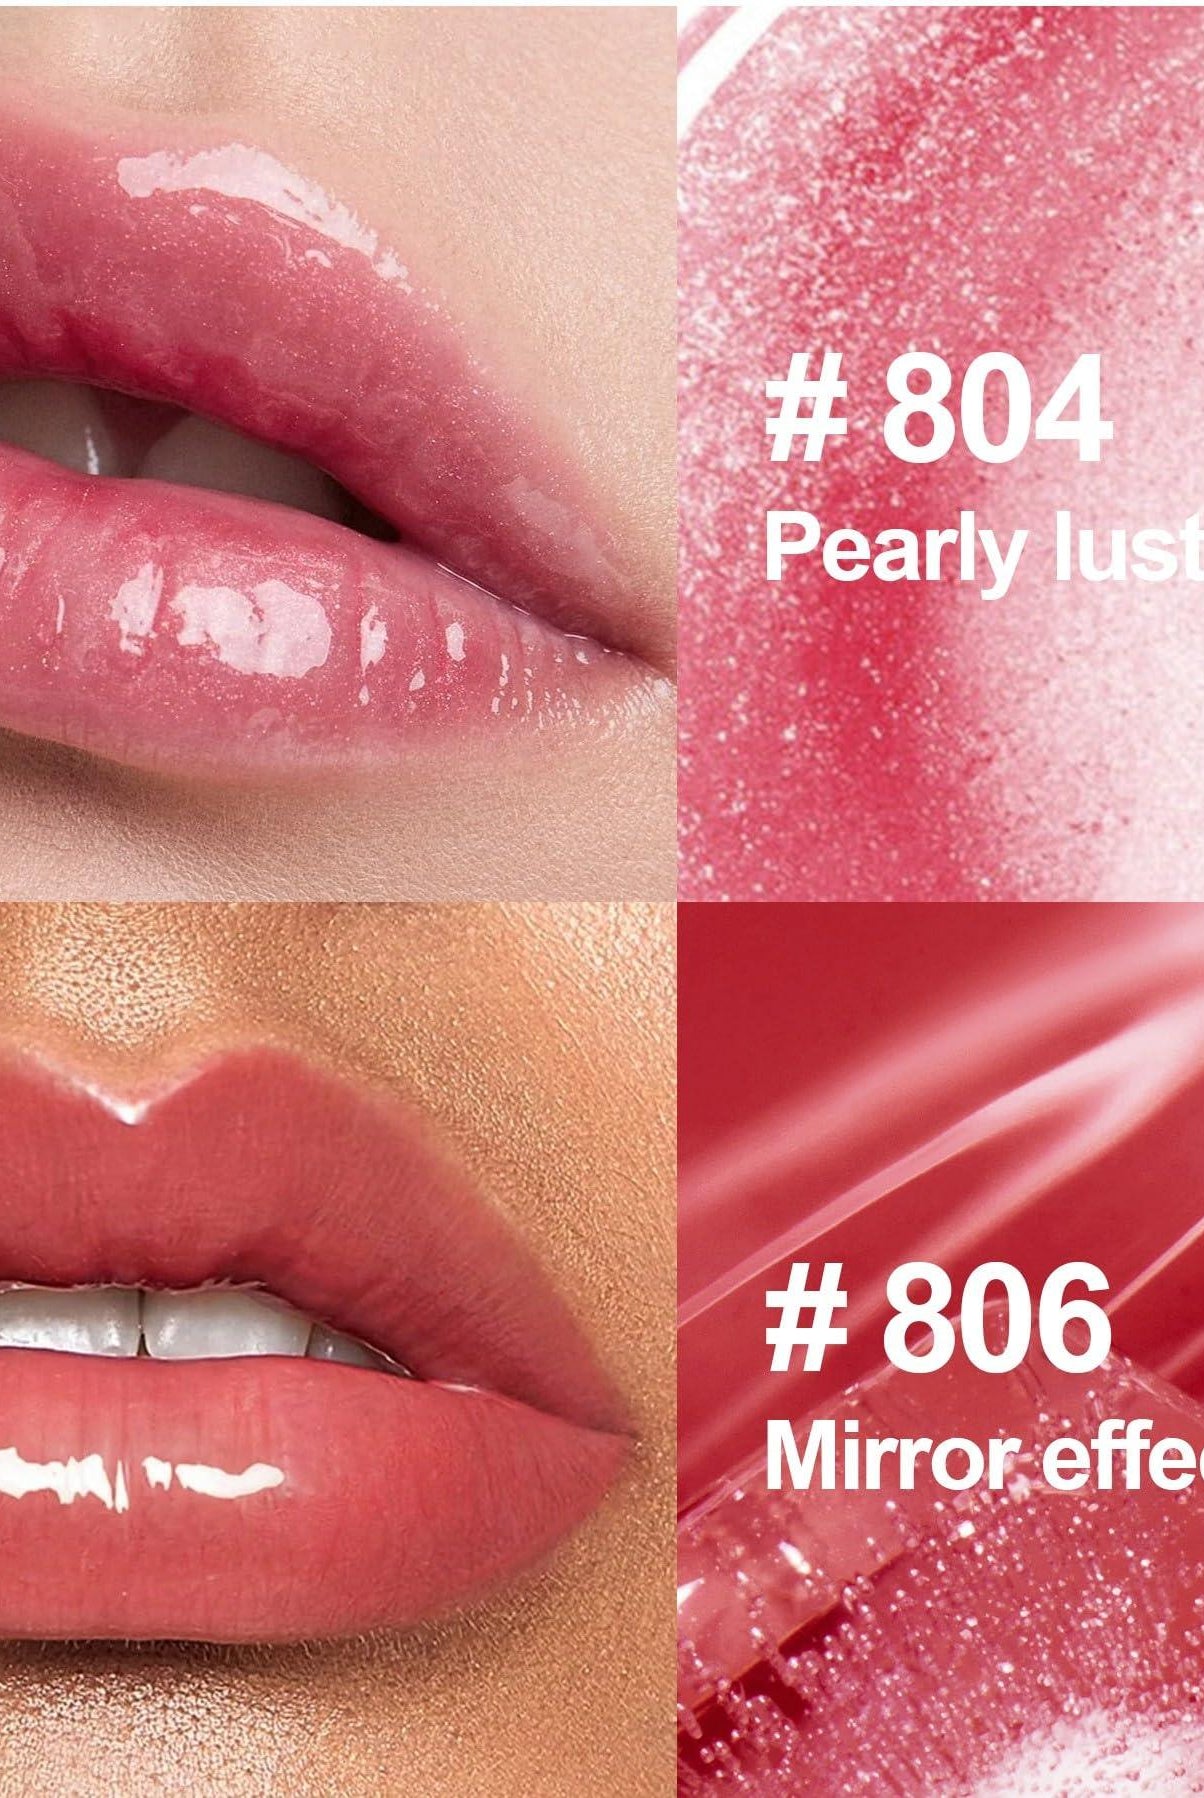 Women's Personal Care - Beauty 6PCS Hydrating Lip Gloss Neutral Nude Nourishing Glossy Lipgloss for Women